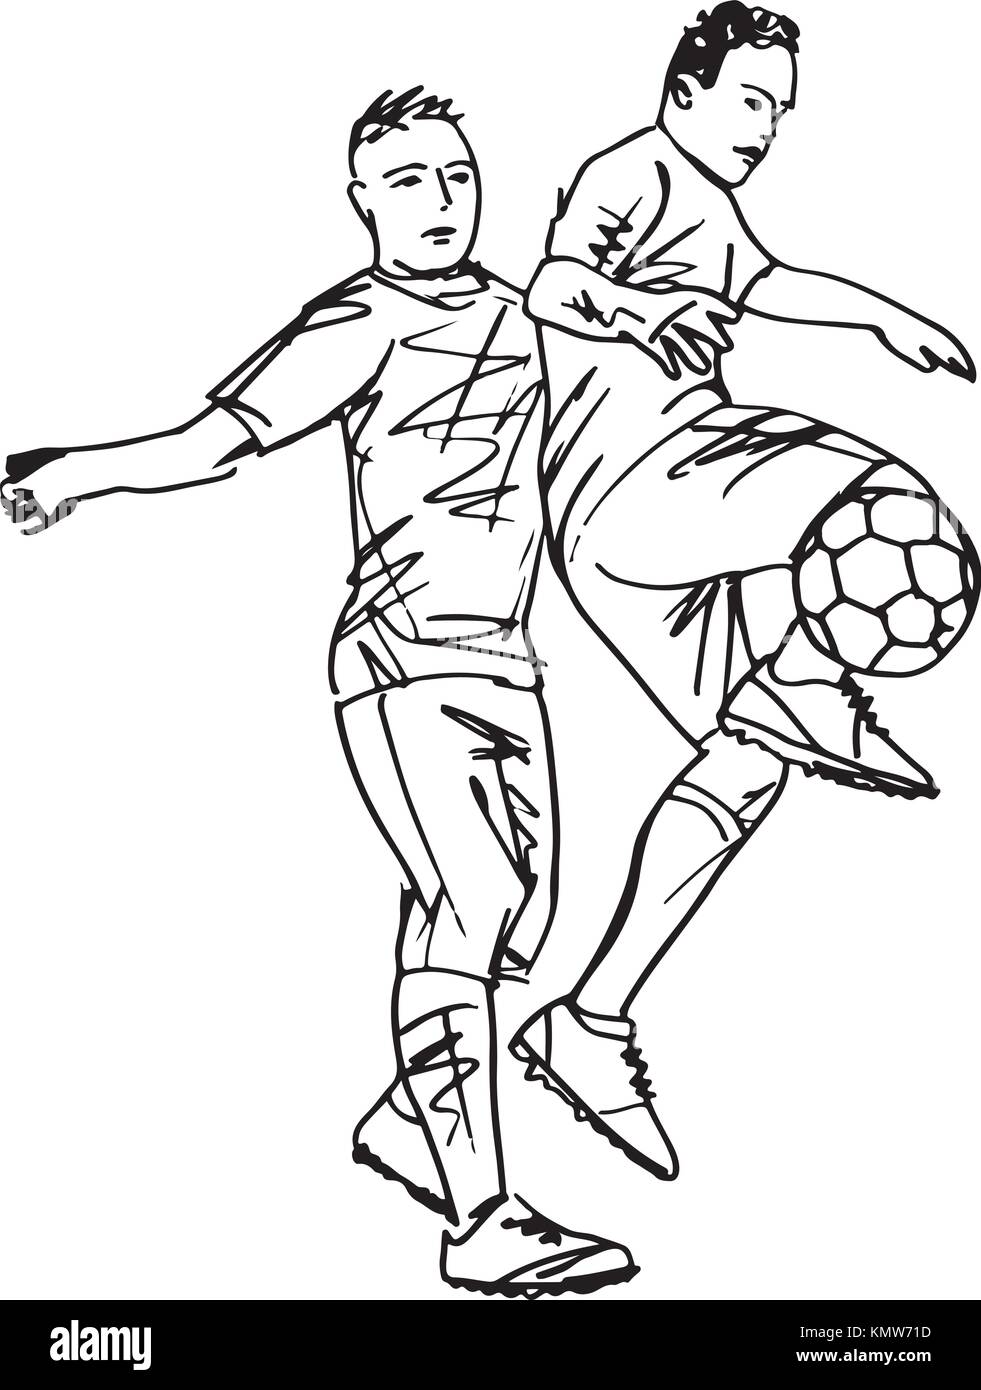 Sketch of Footbal player illustration Stock Vector